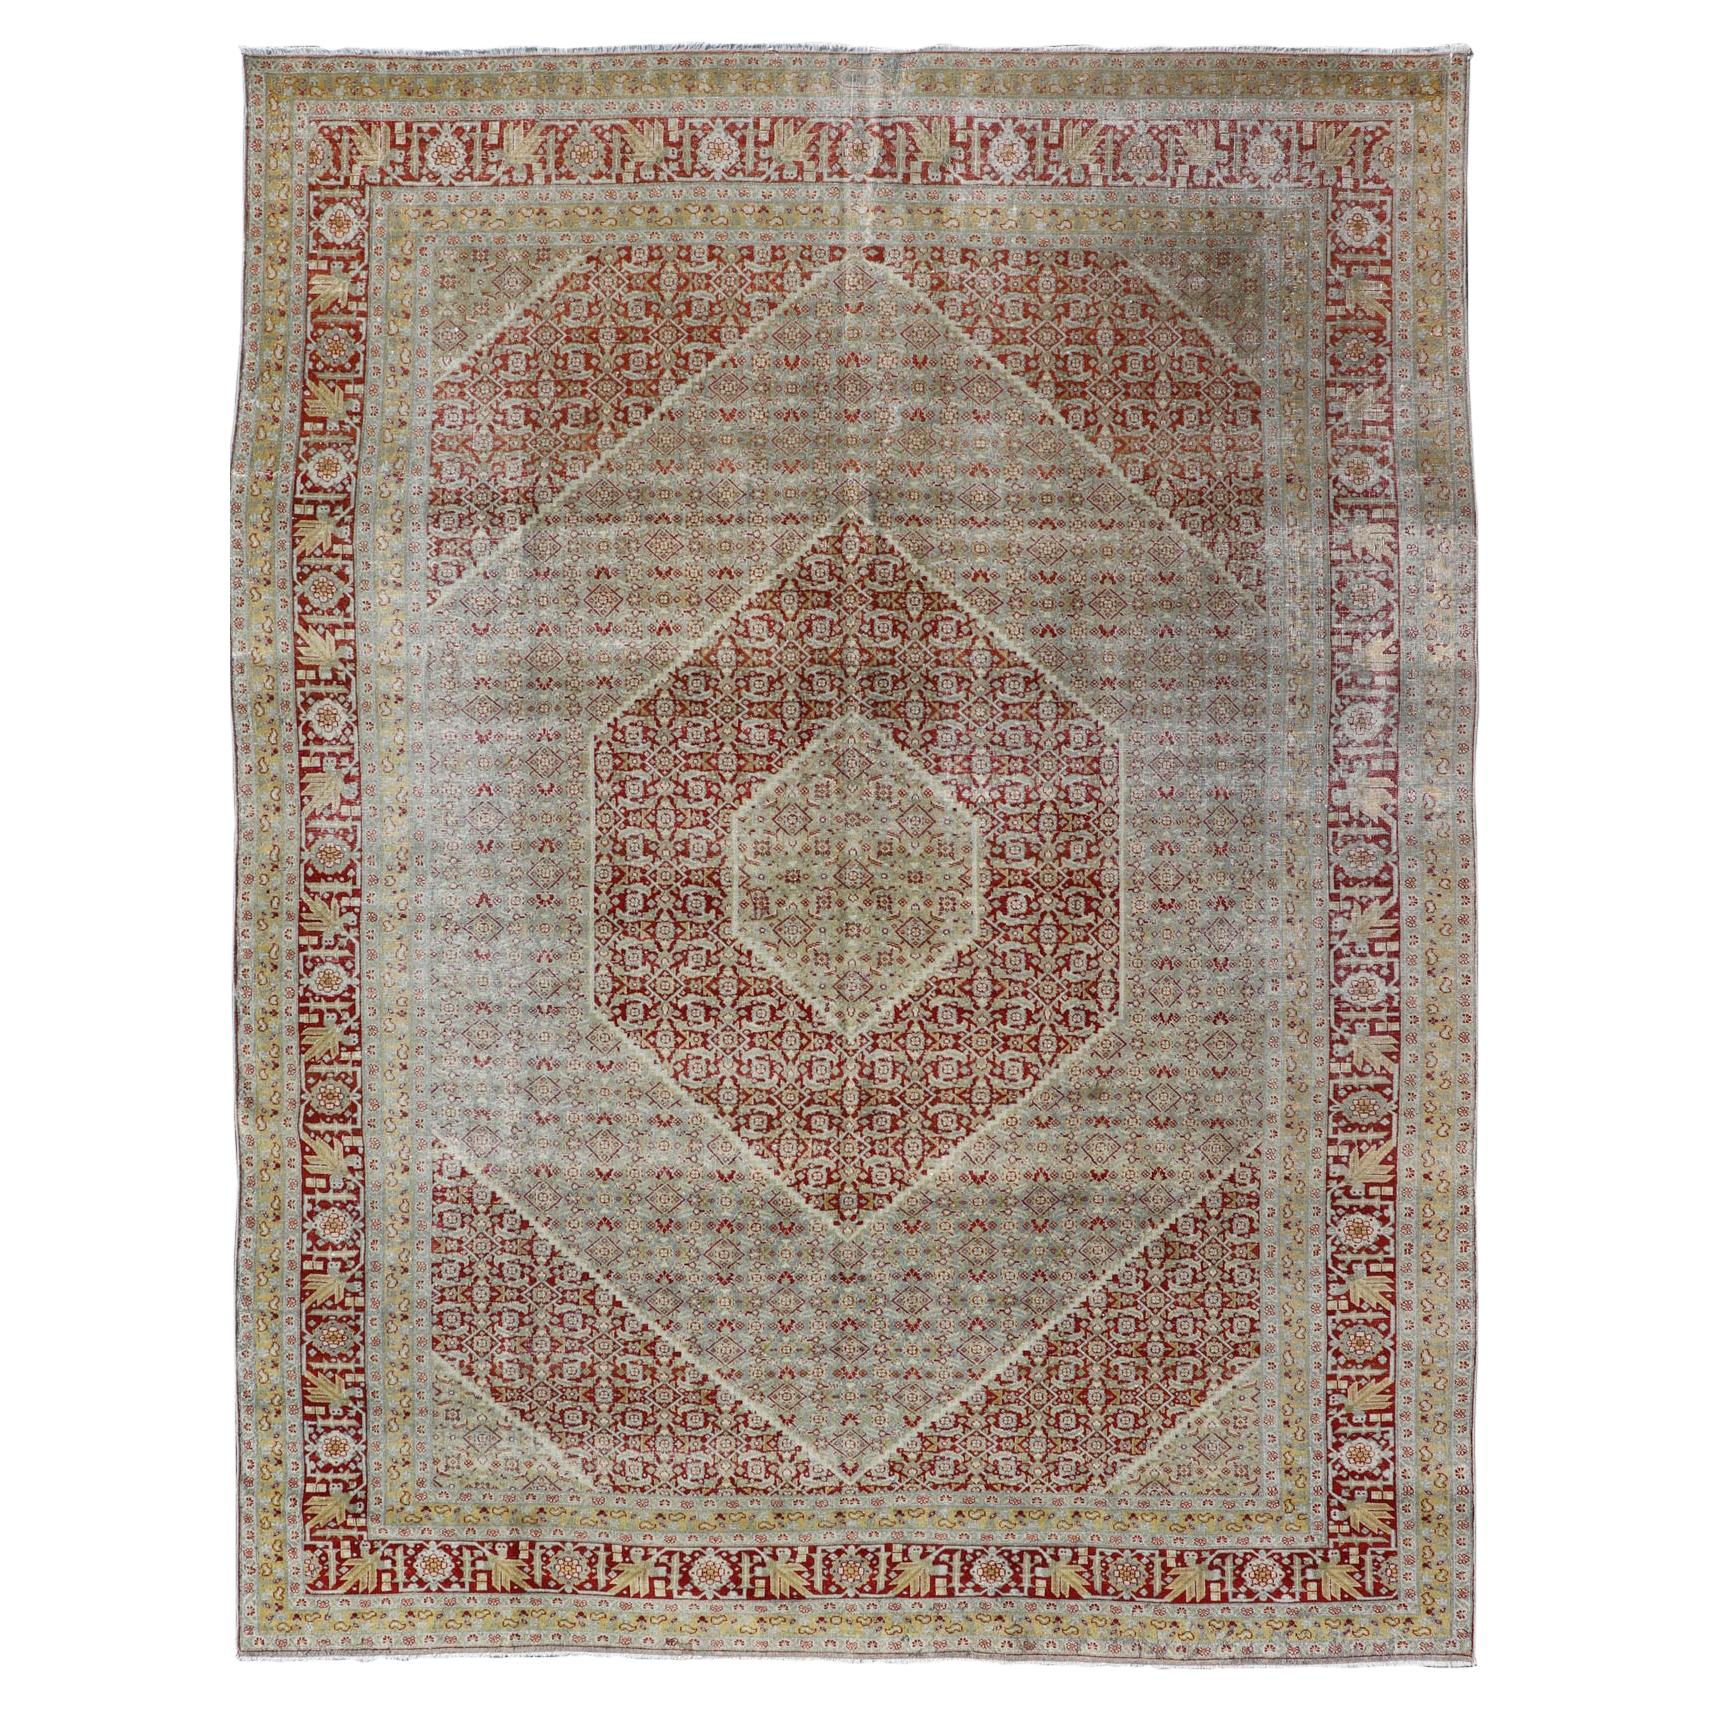 Antique Persian Tabriz Distressed Carpet with Geometric Diamond Design For Sale